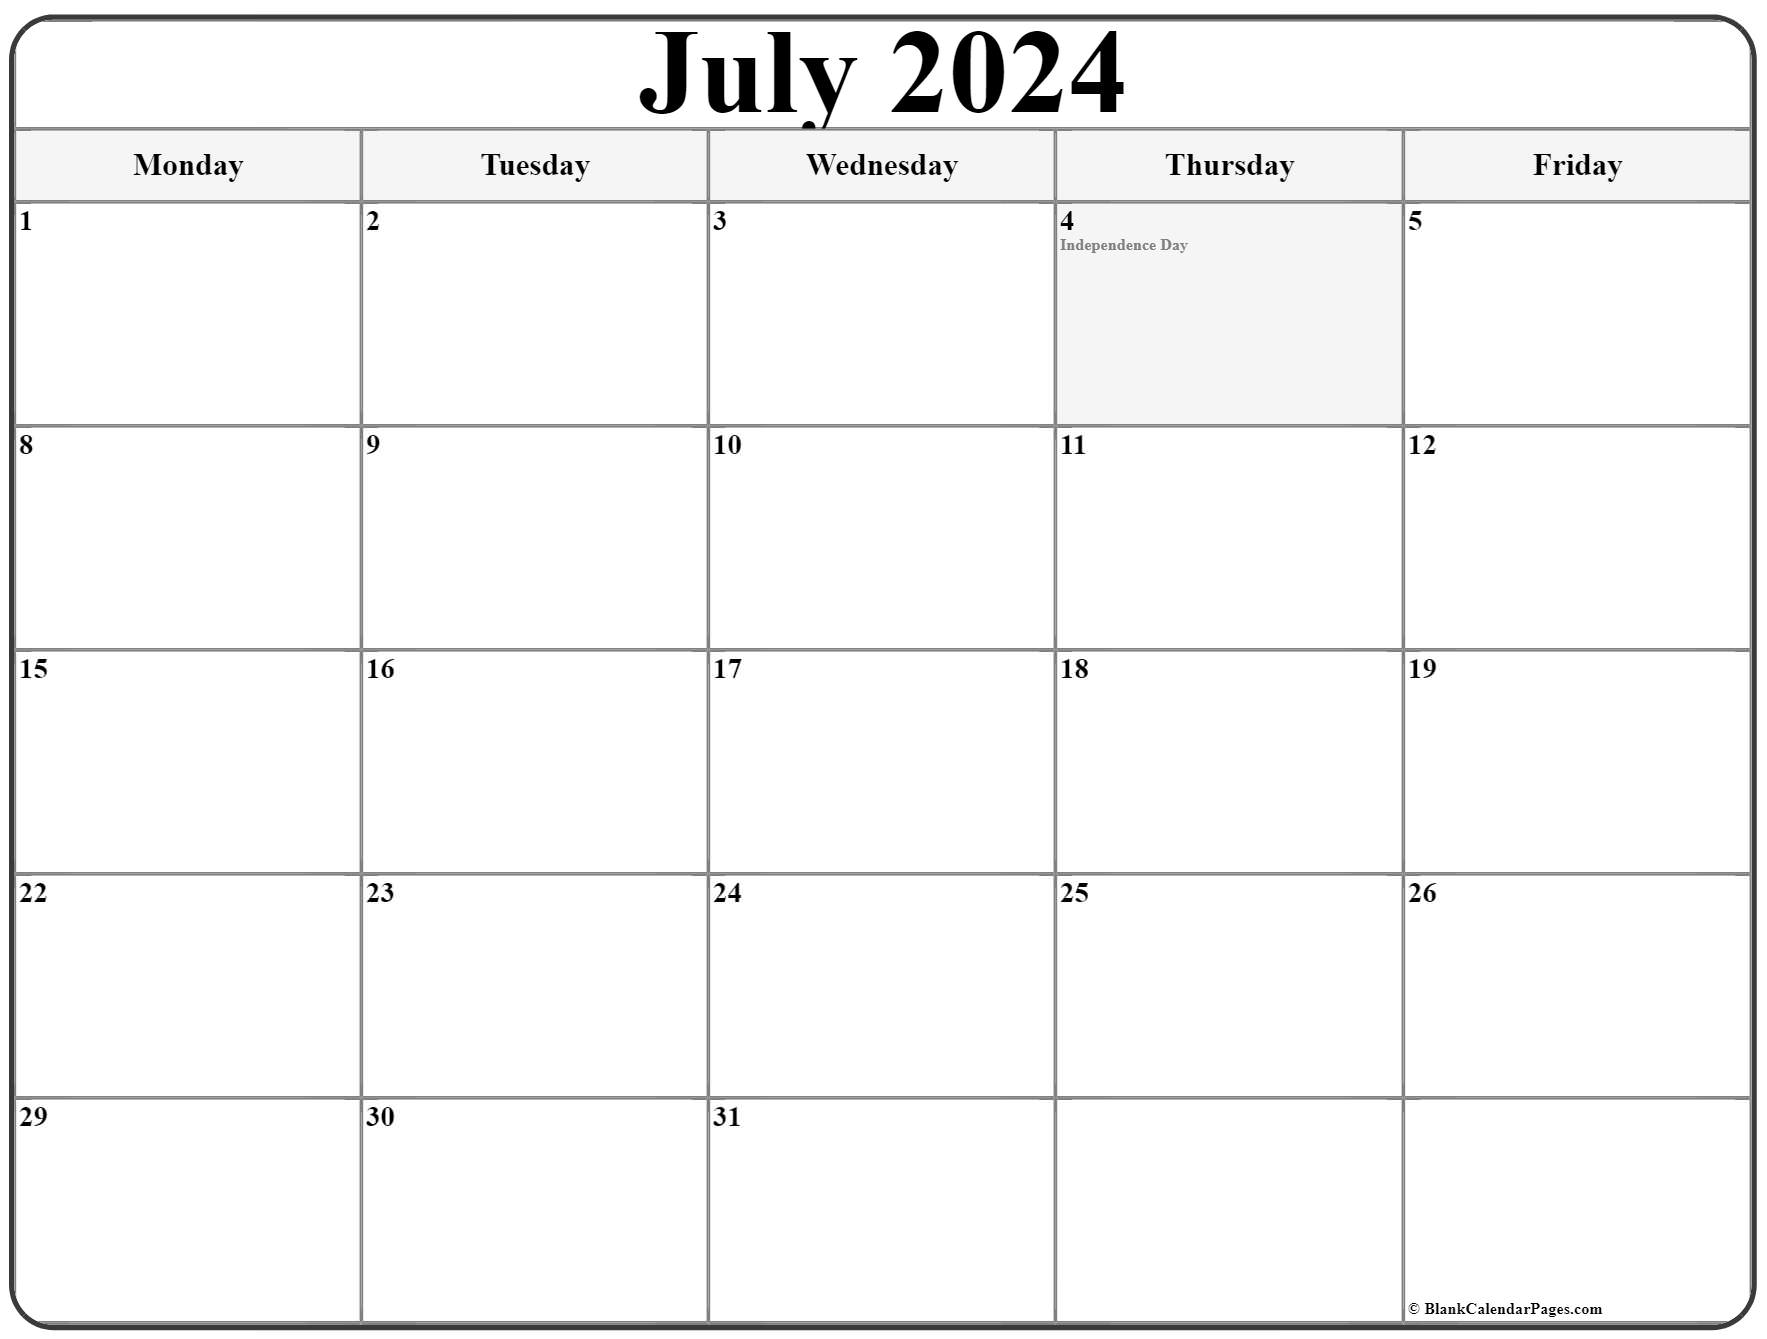 Friday July 14 2024 Jolie Madelyn